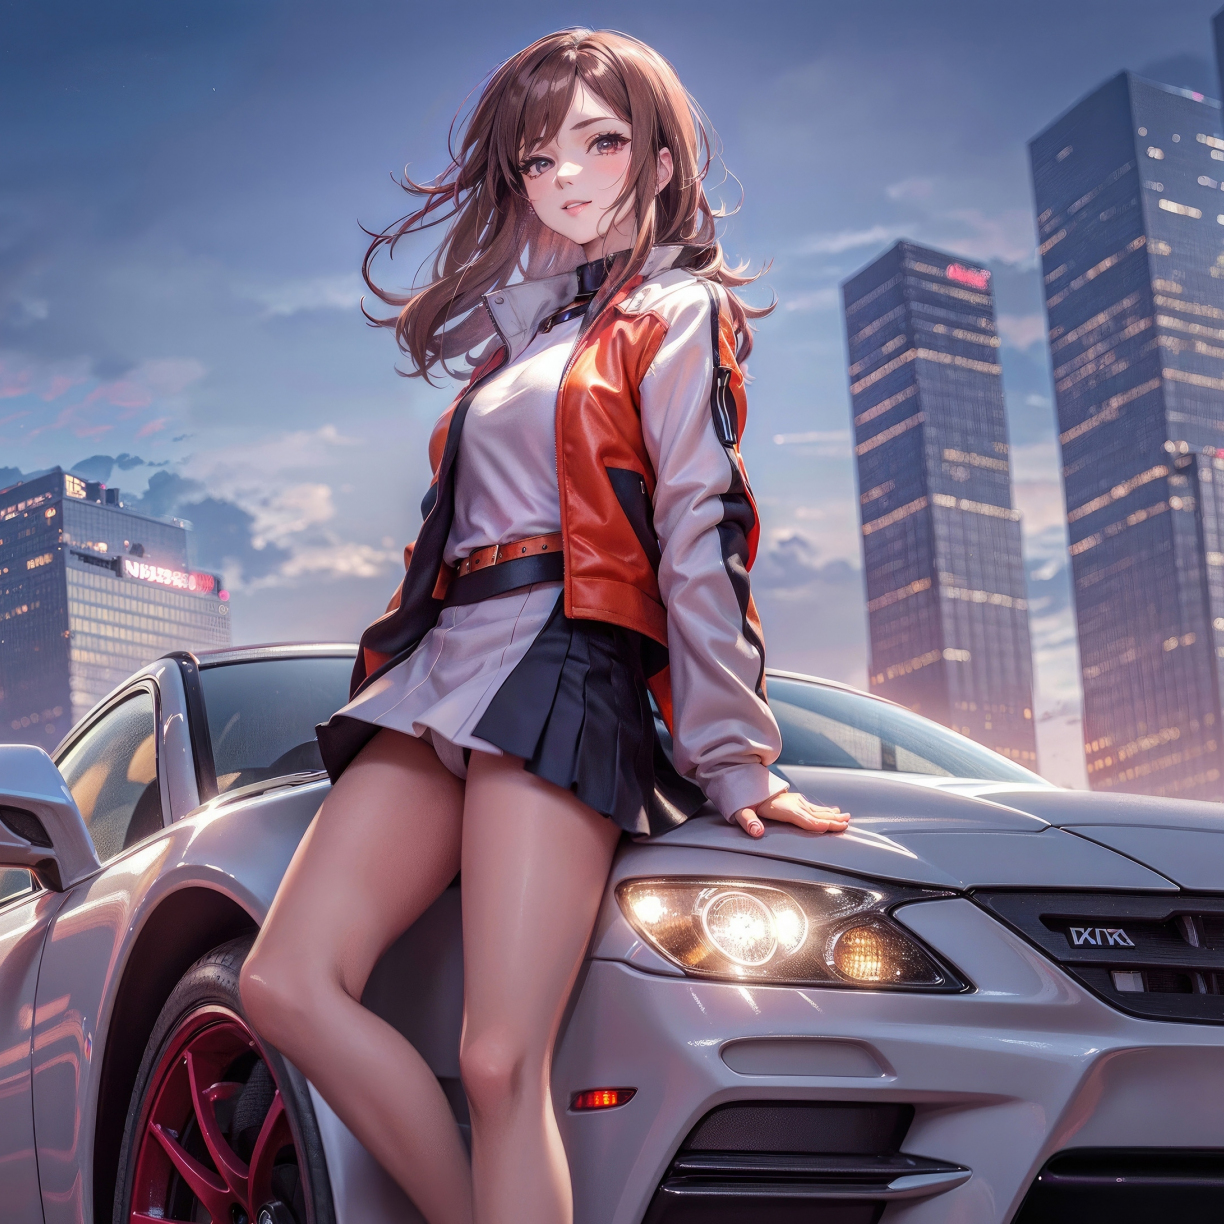 Anime girl with a car, beautiful, art, 1224x1224 wallpaper